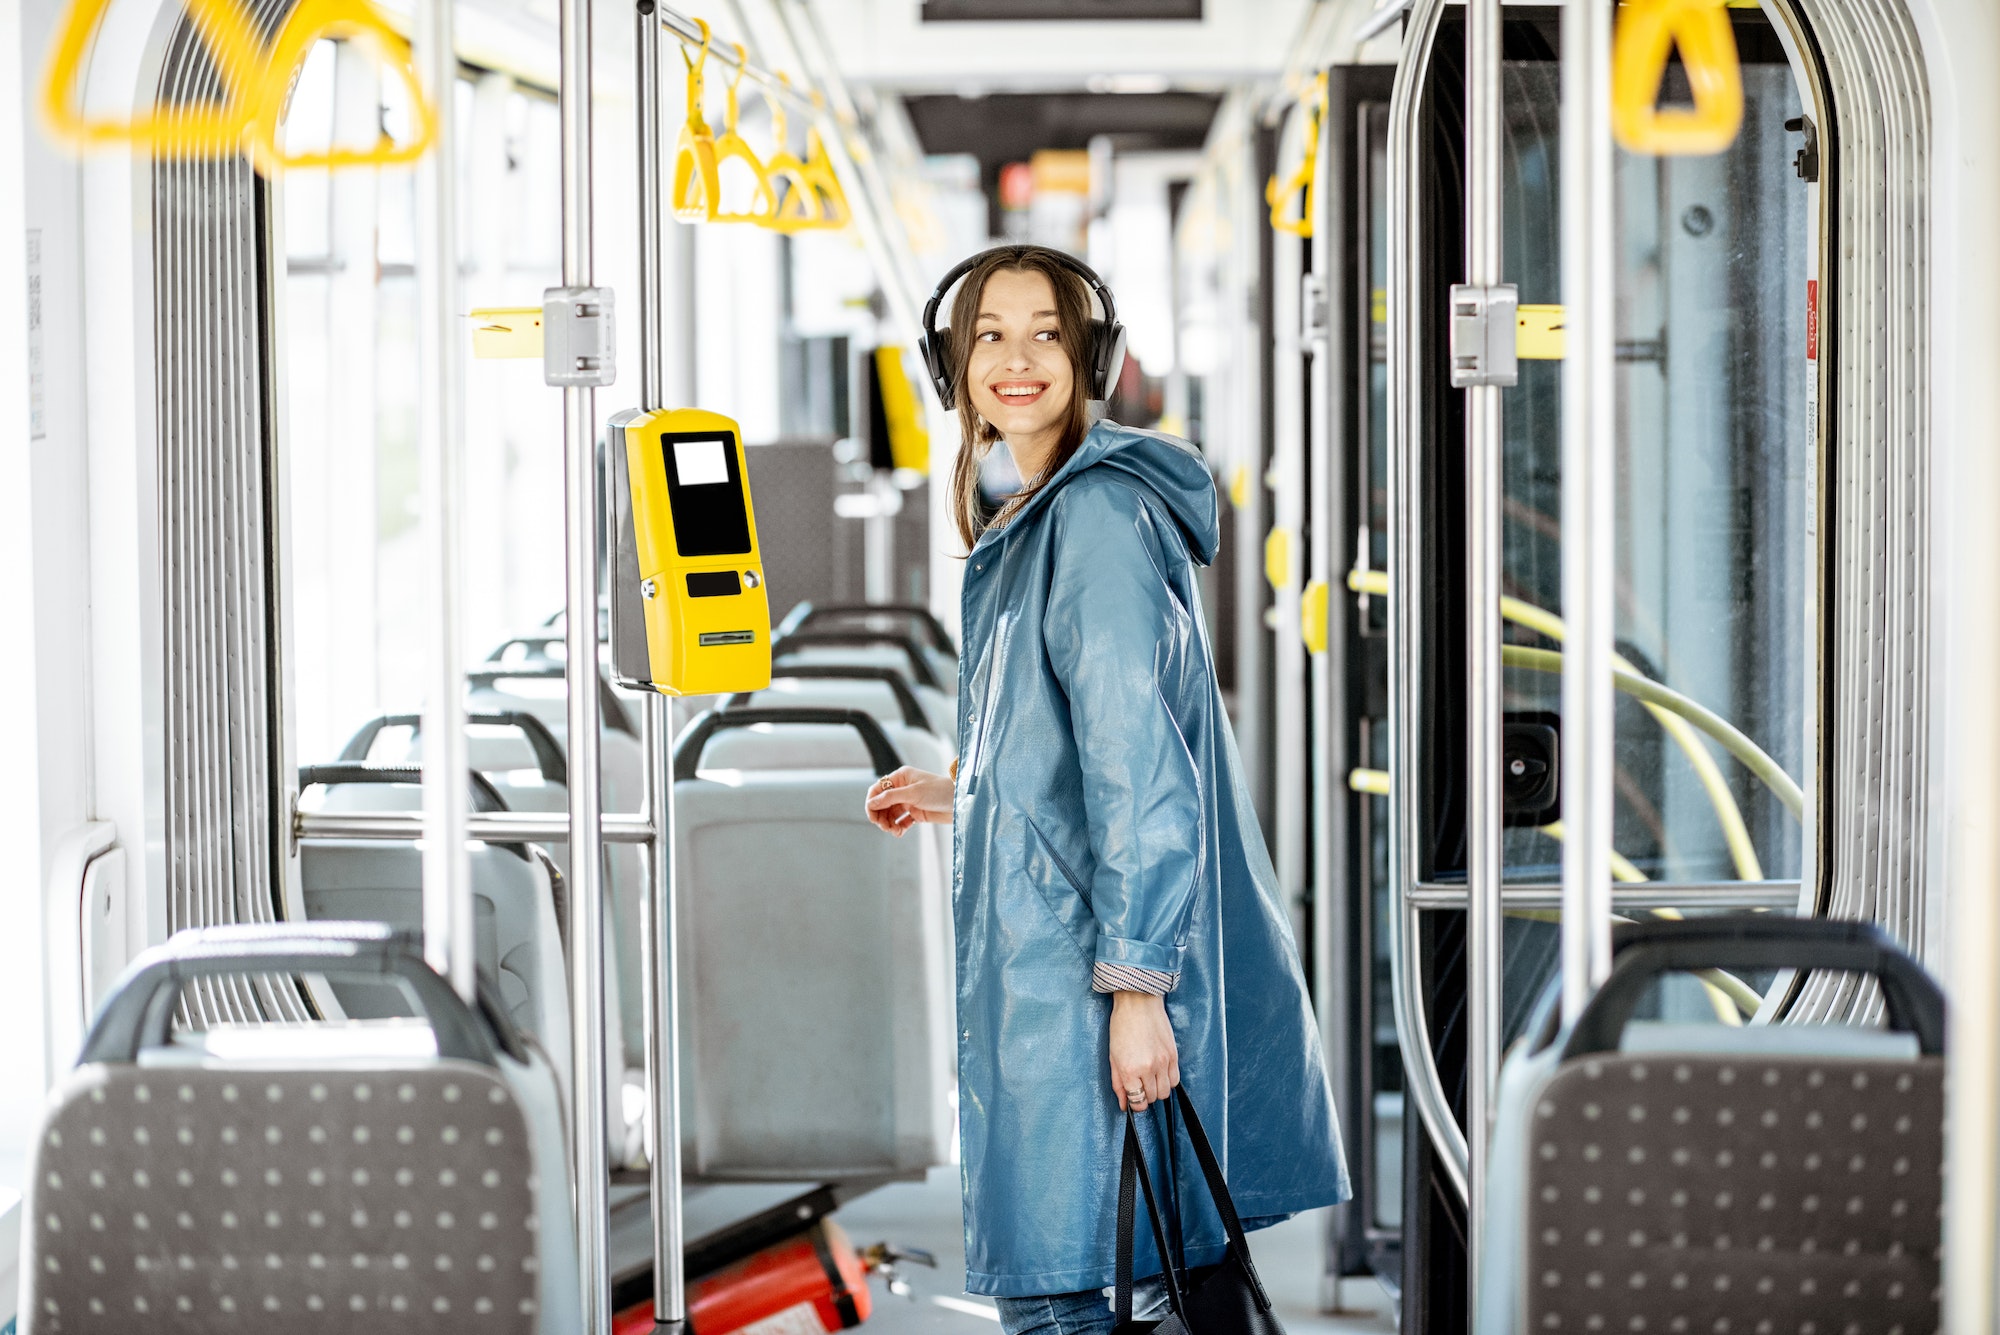 Female passenger using public transport